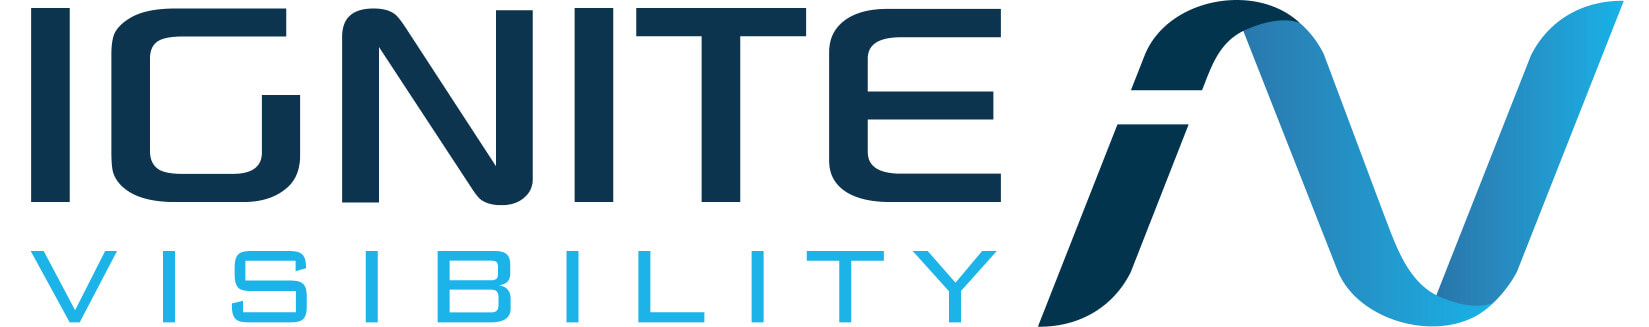 Best Los Angeles SEO Company Logo: Ignite Visibility